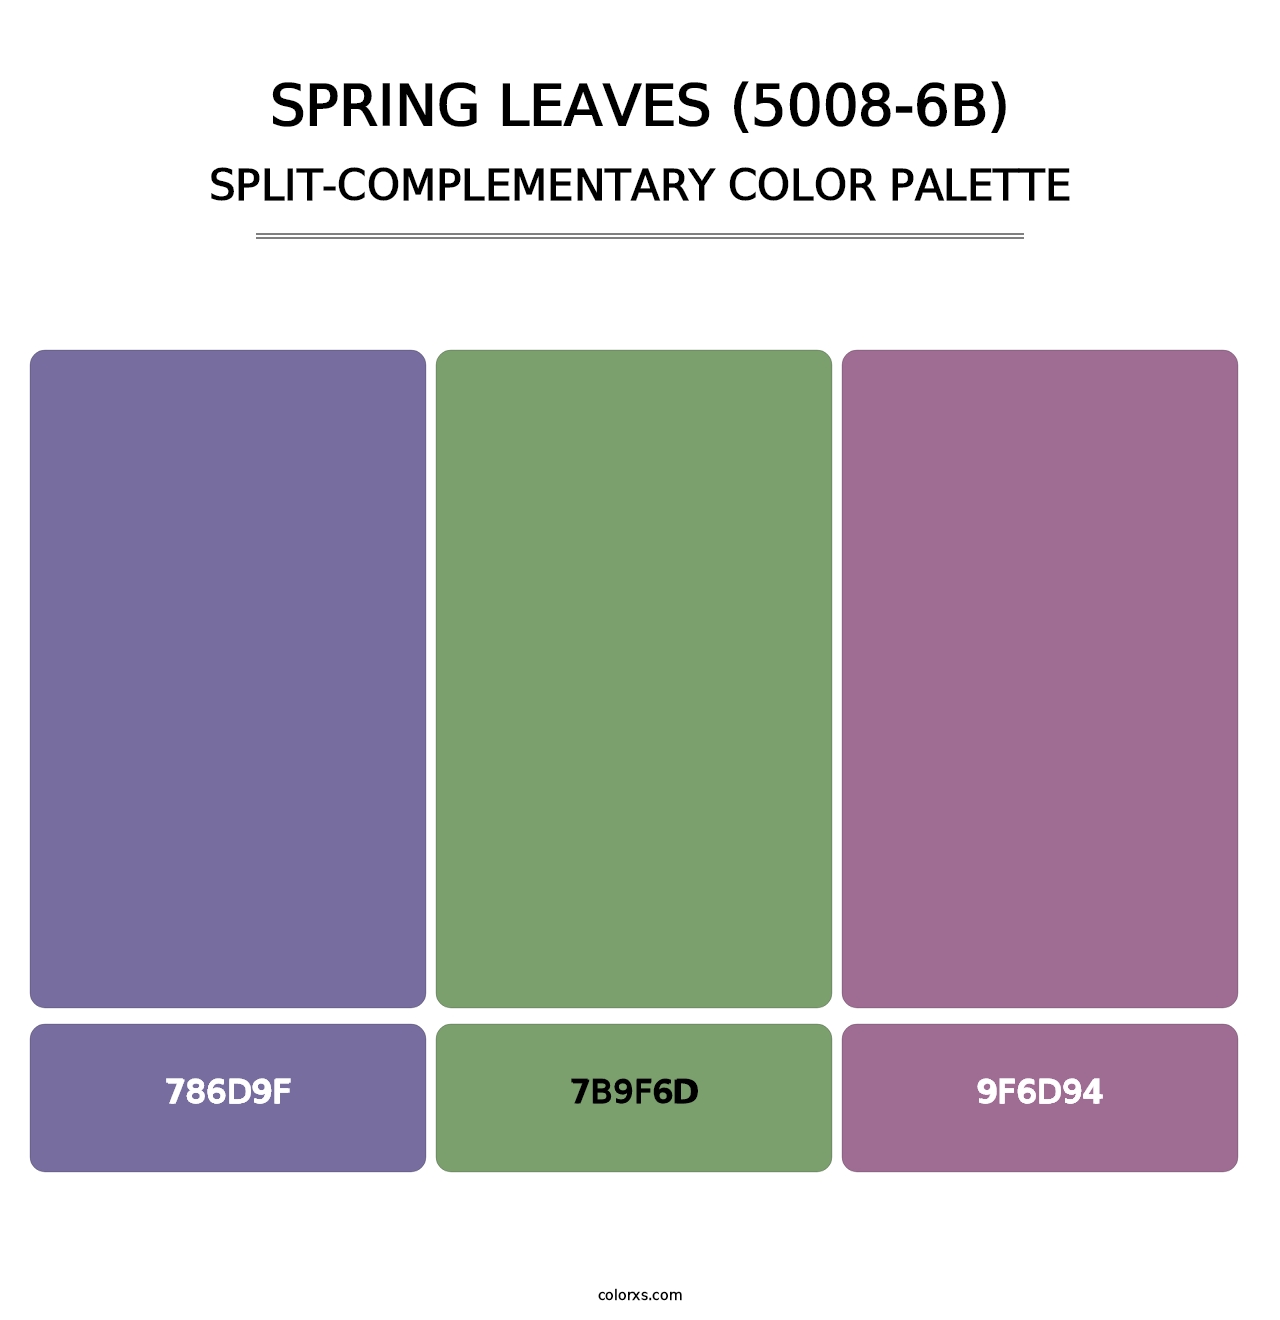 Spring Leaves (5008-6B) - Split-Complementary Color Palette